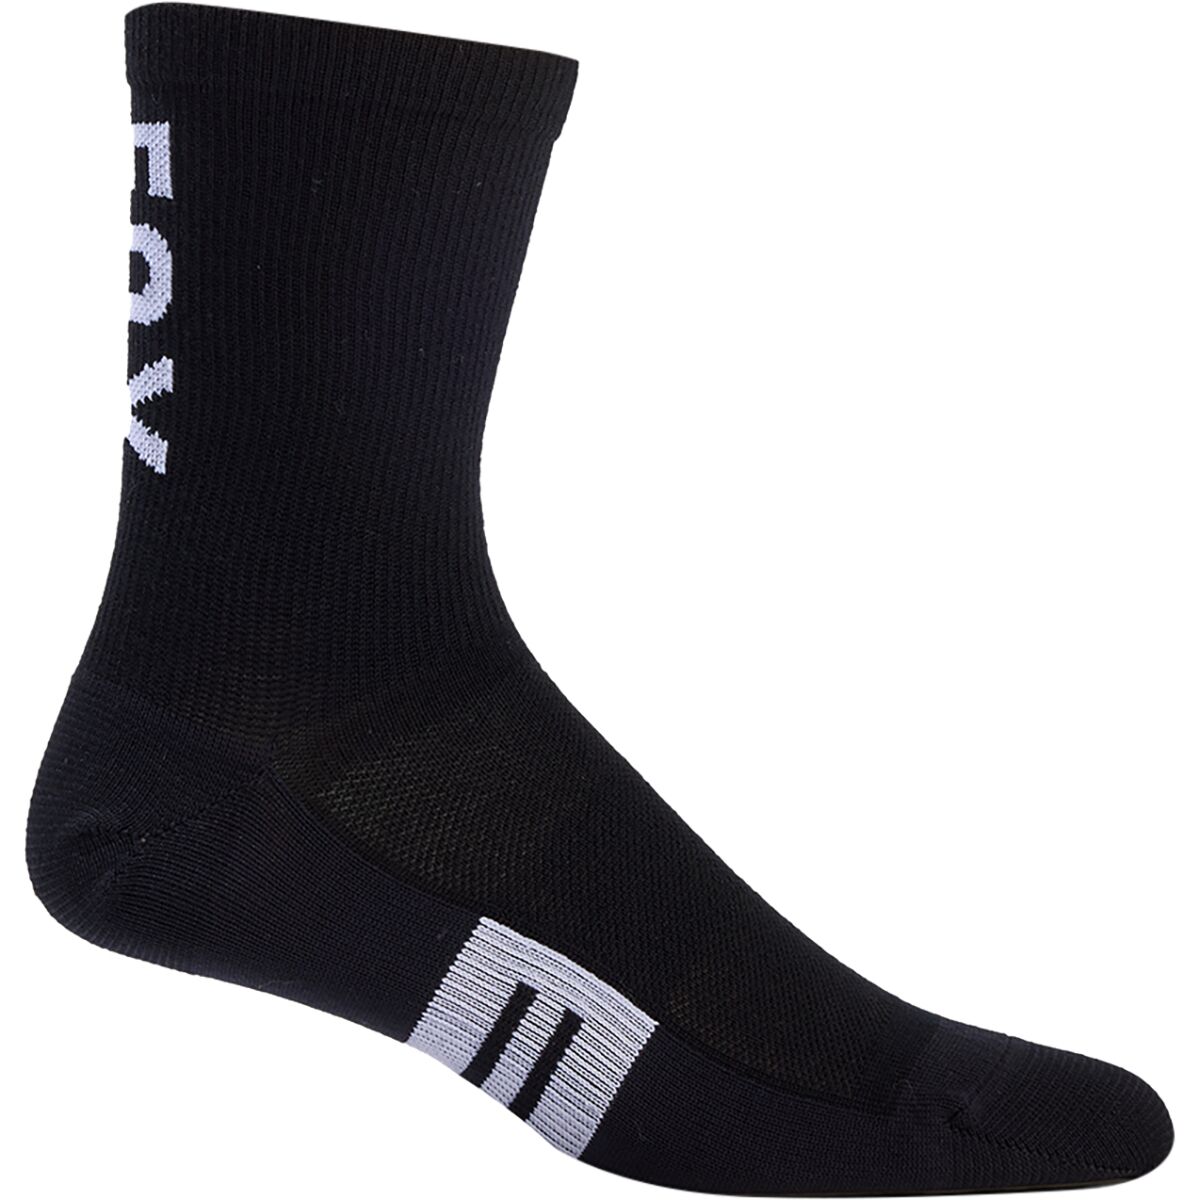 Fox Racing Flexair Merino 6in Sock Black, L/XL - Men's